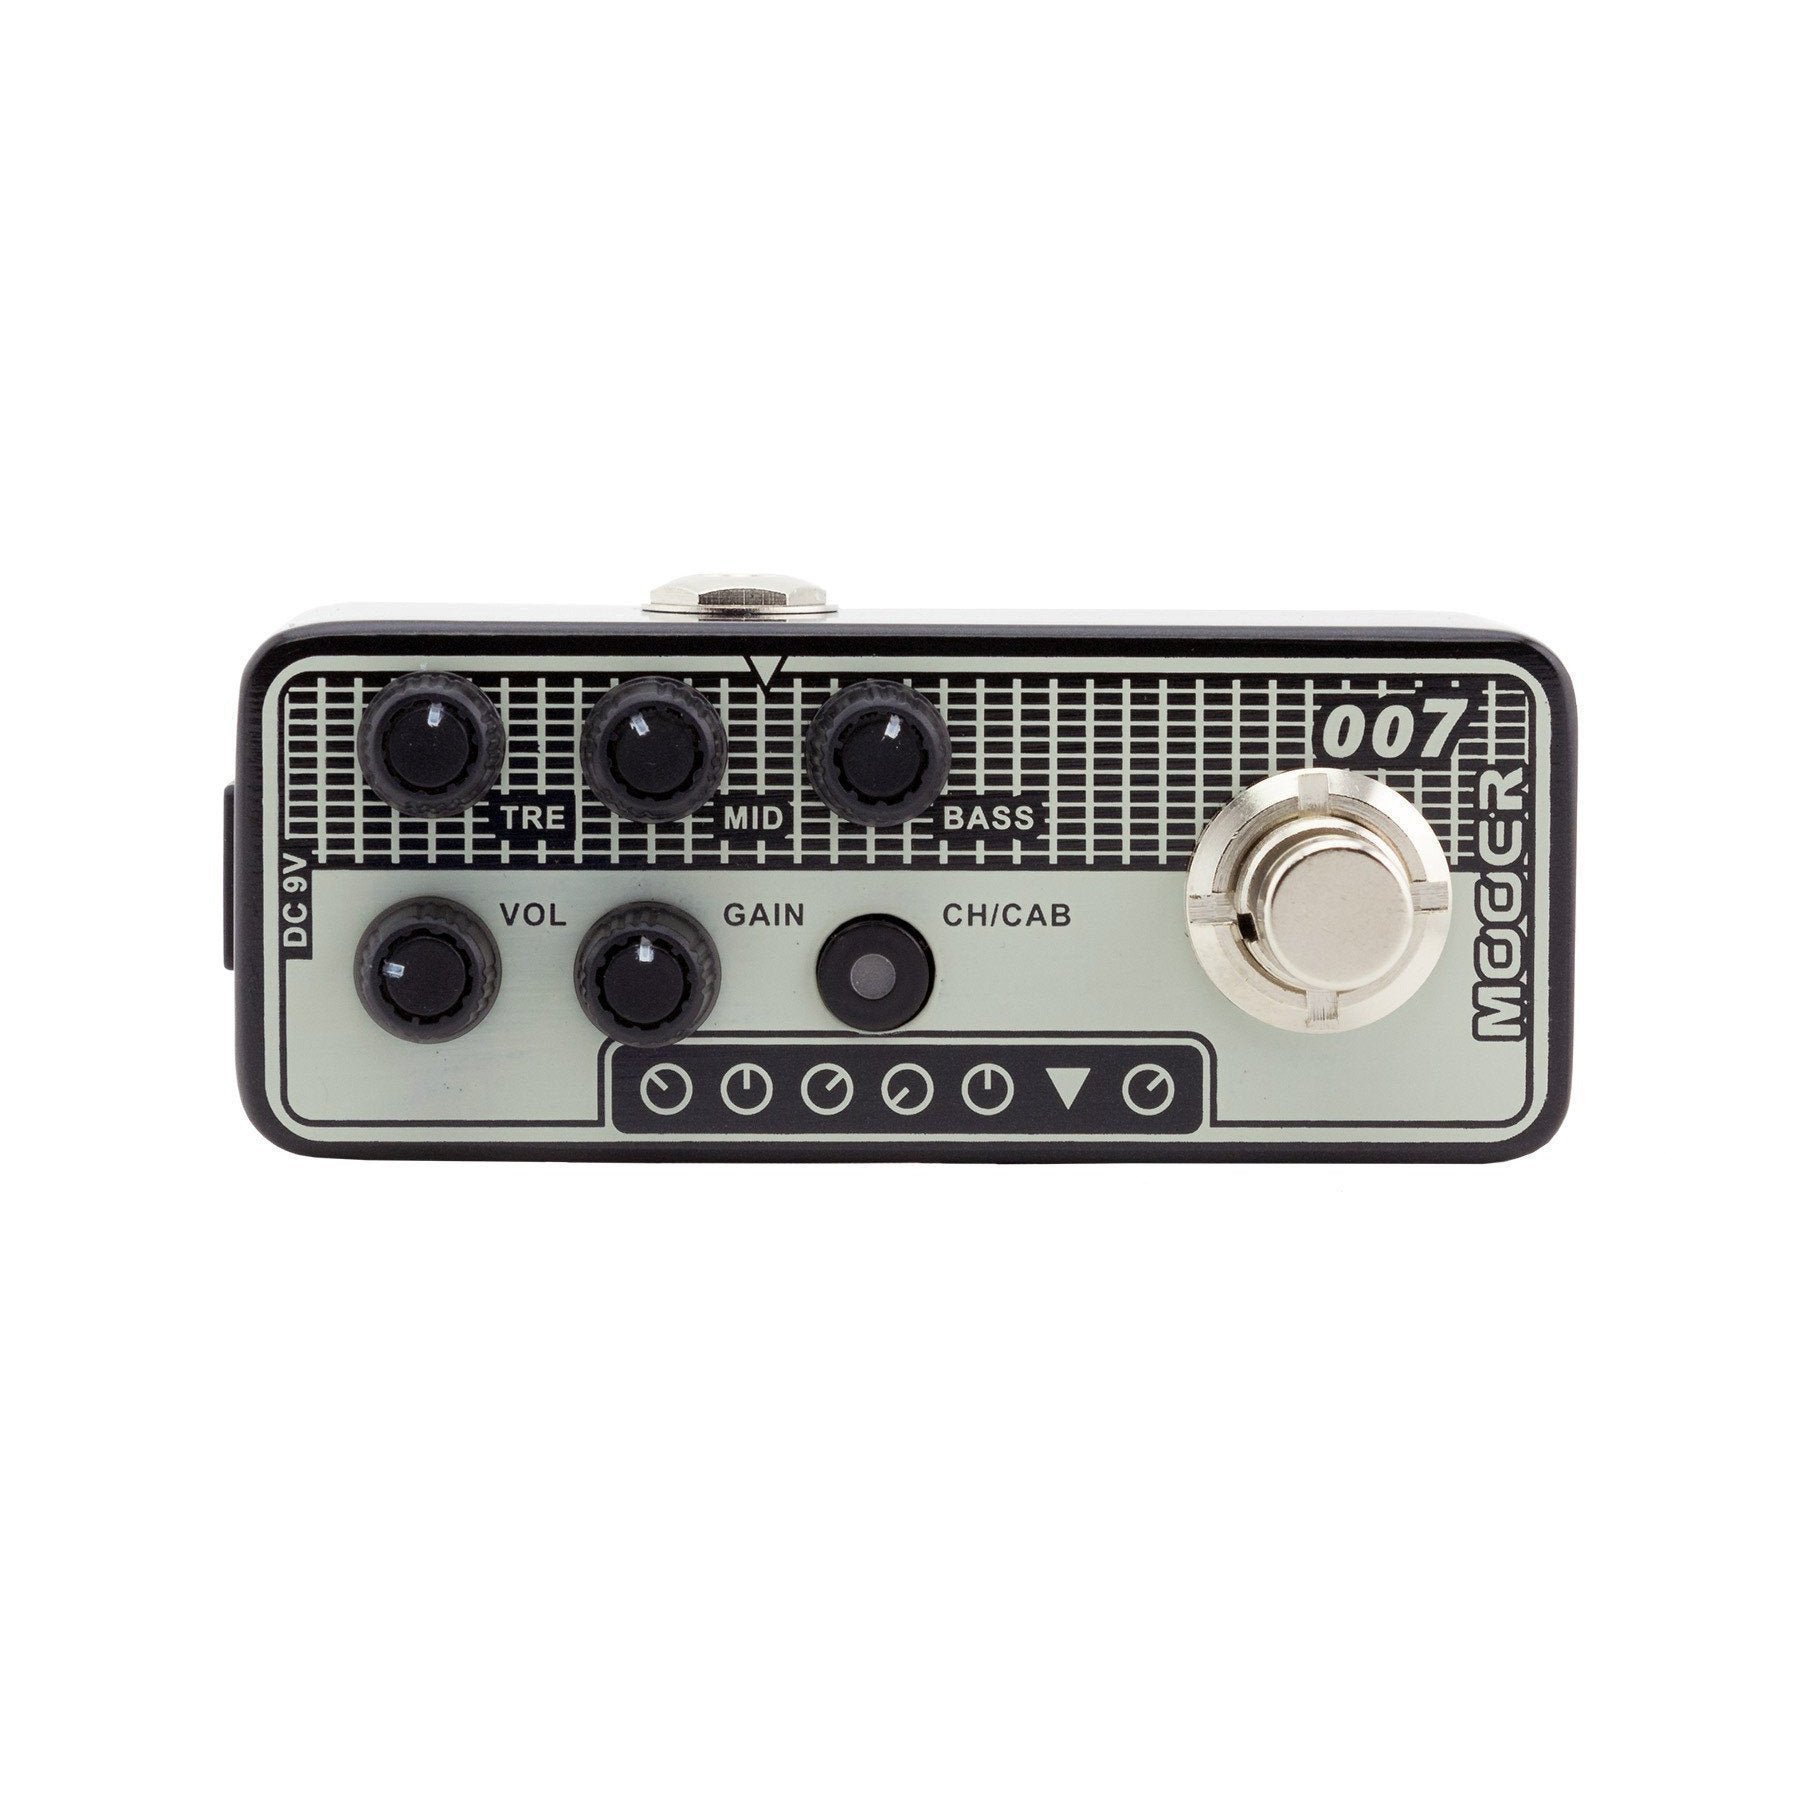 Mooer '007 - Regal Tone' Digital Micro Preamp Guitar Effects Pedal